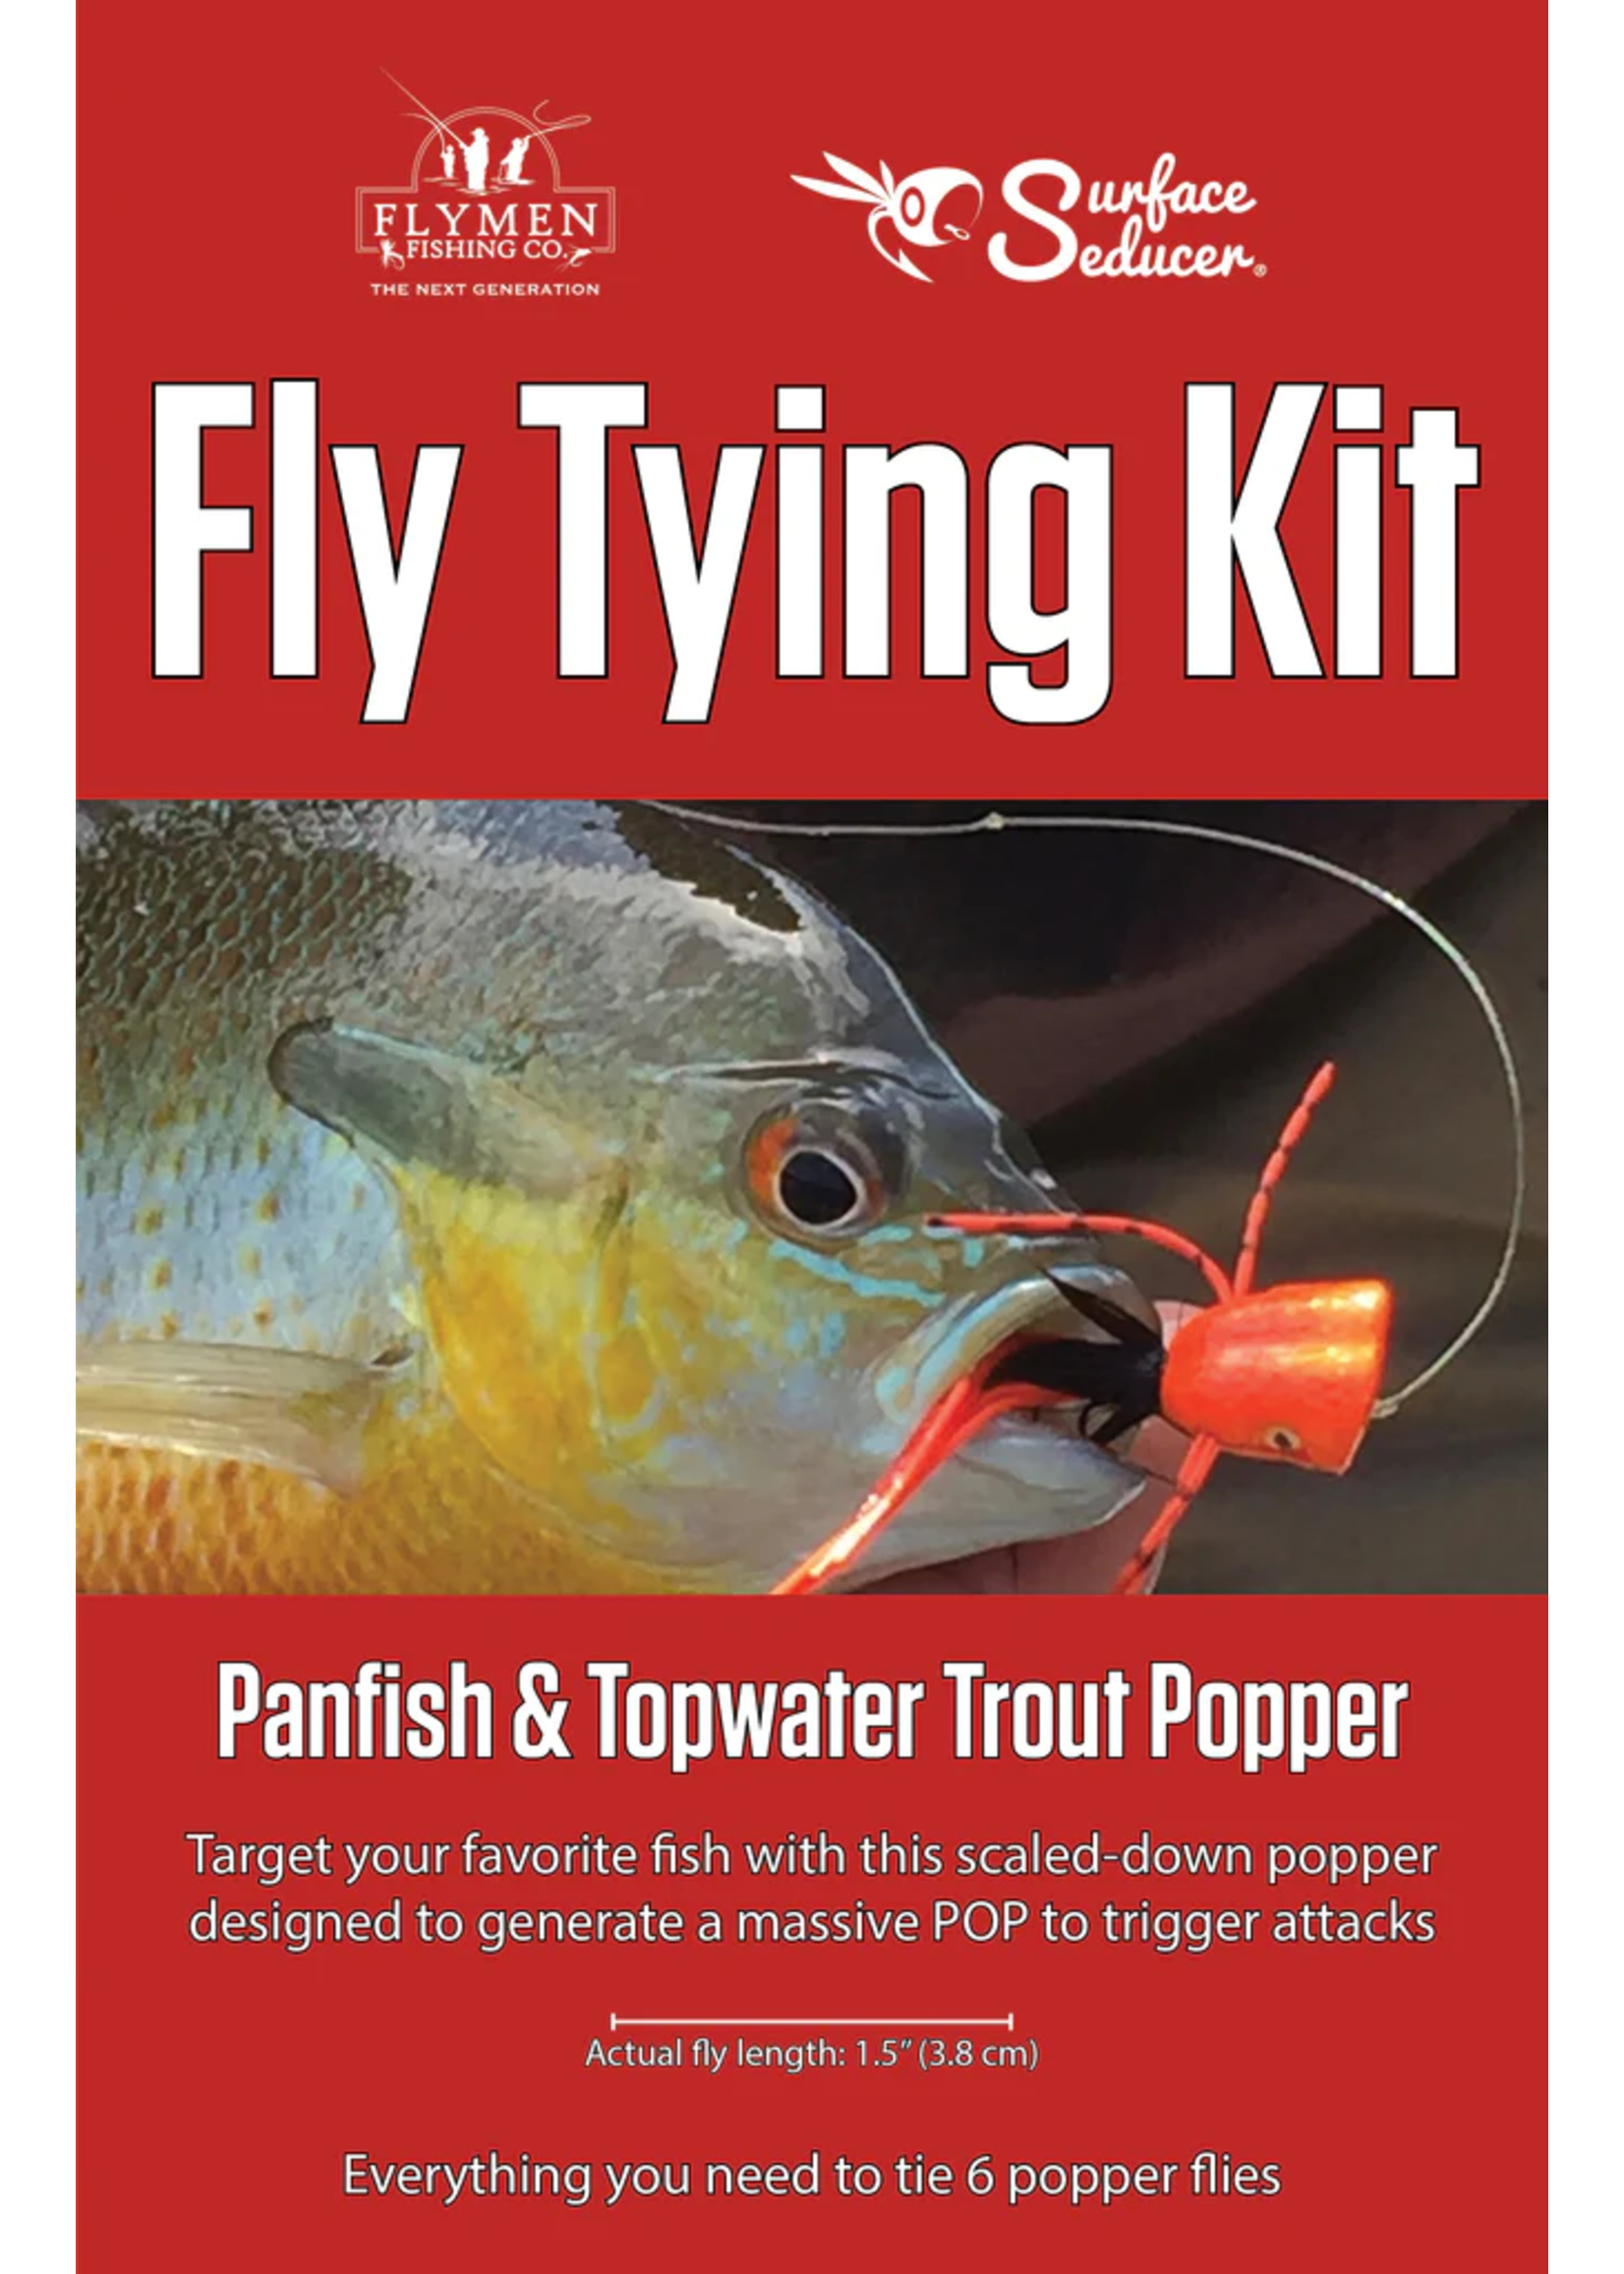 Flymen Fishing Company Flymen Fishing Company Fly Tying Kit: Surface Seducer Panfish & Topwater Trout Popper